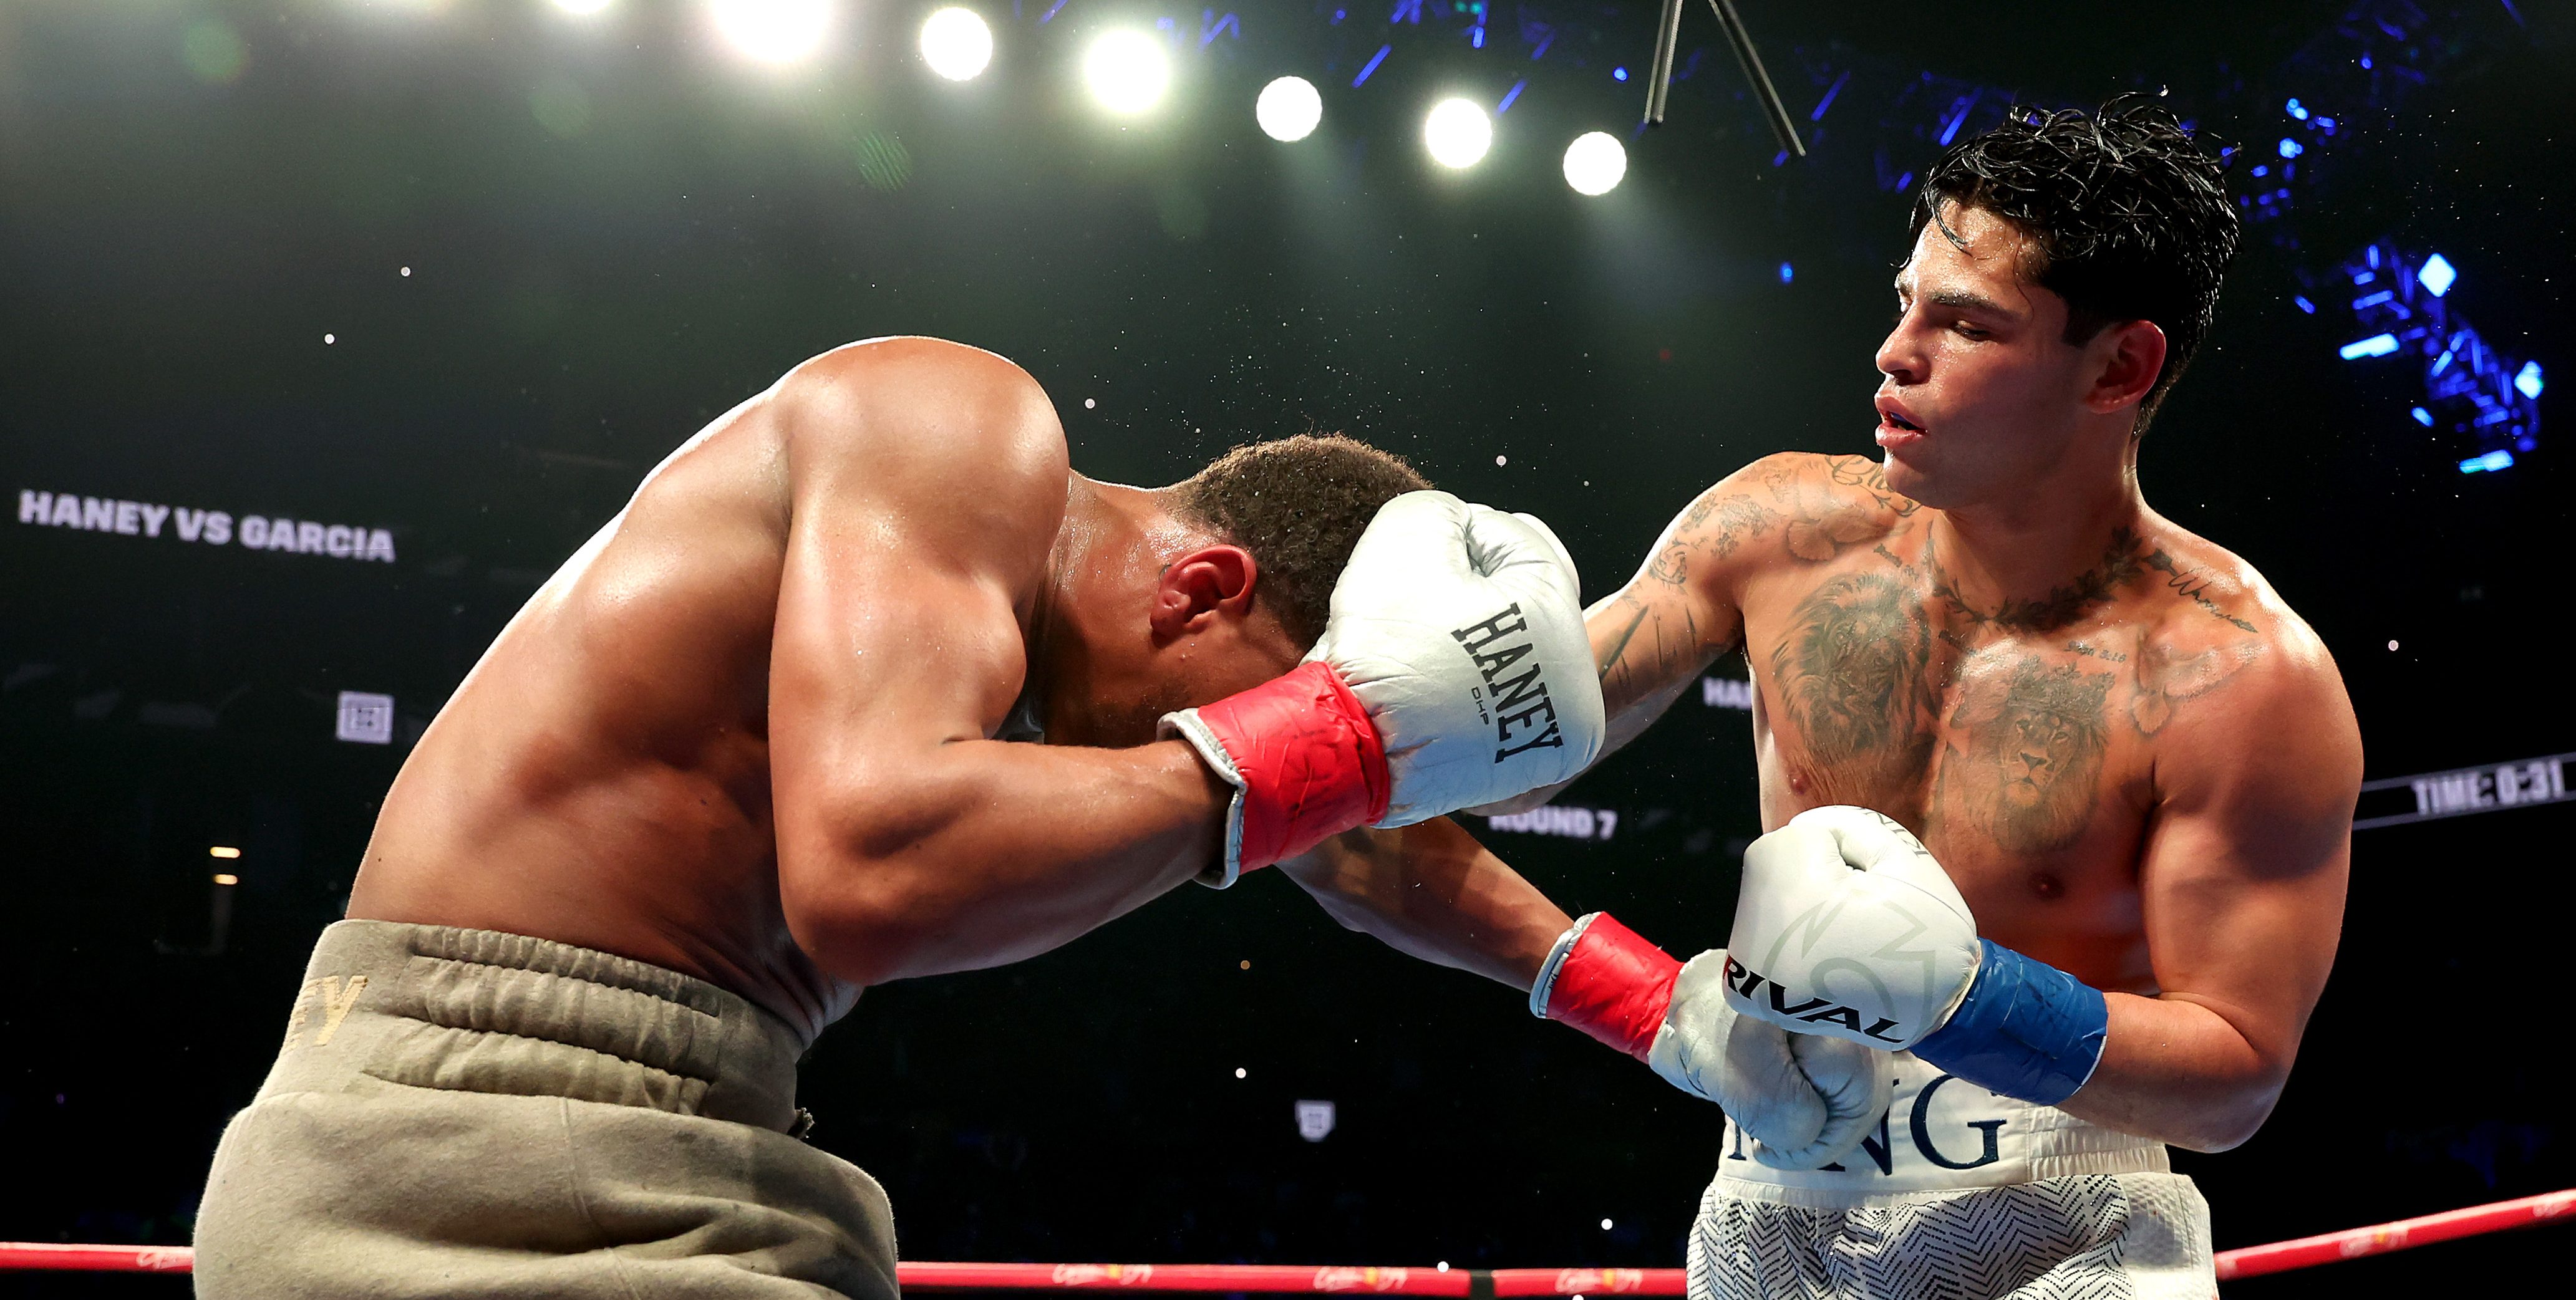 Boxer Ryan Garcia denies using performance-enhancing drugs after
beating Devin Haney